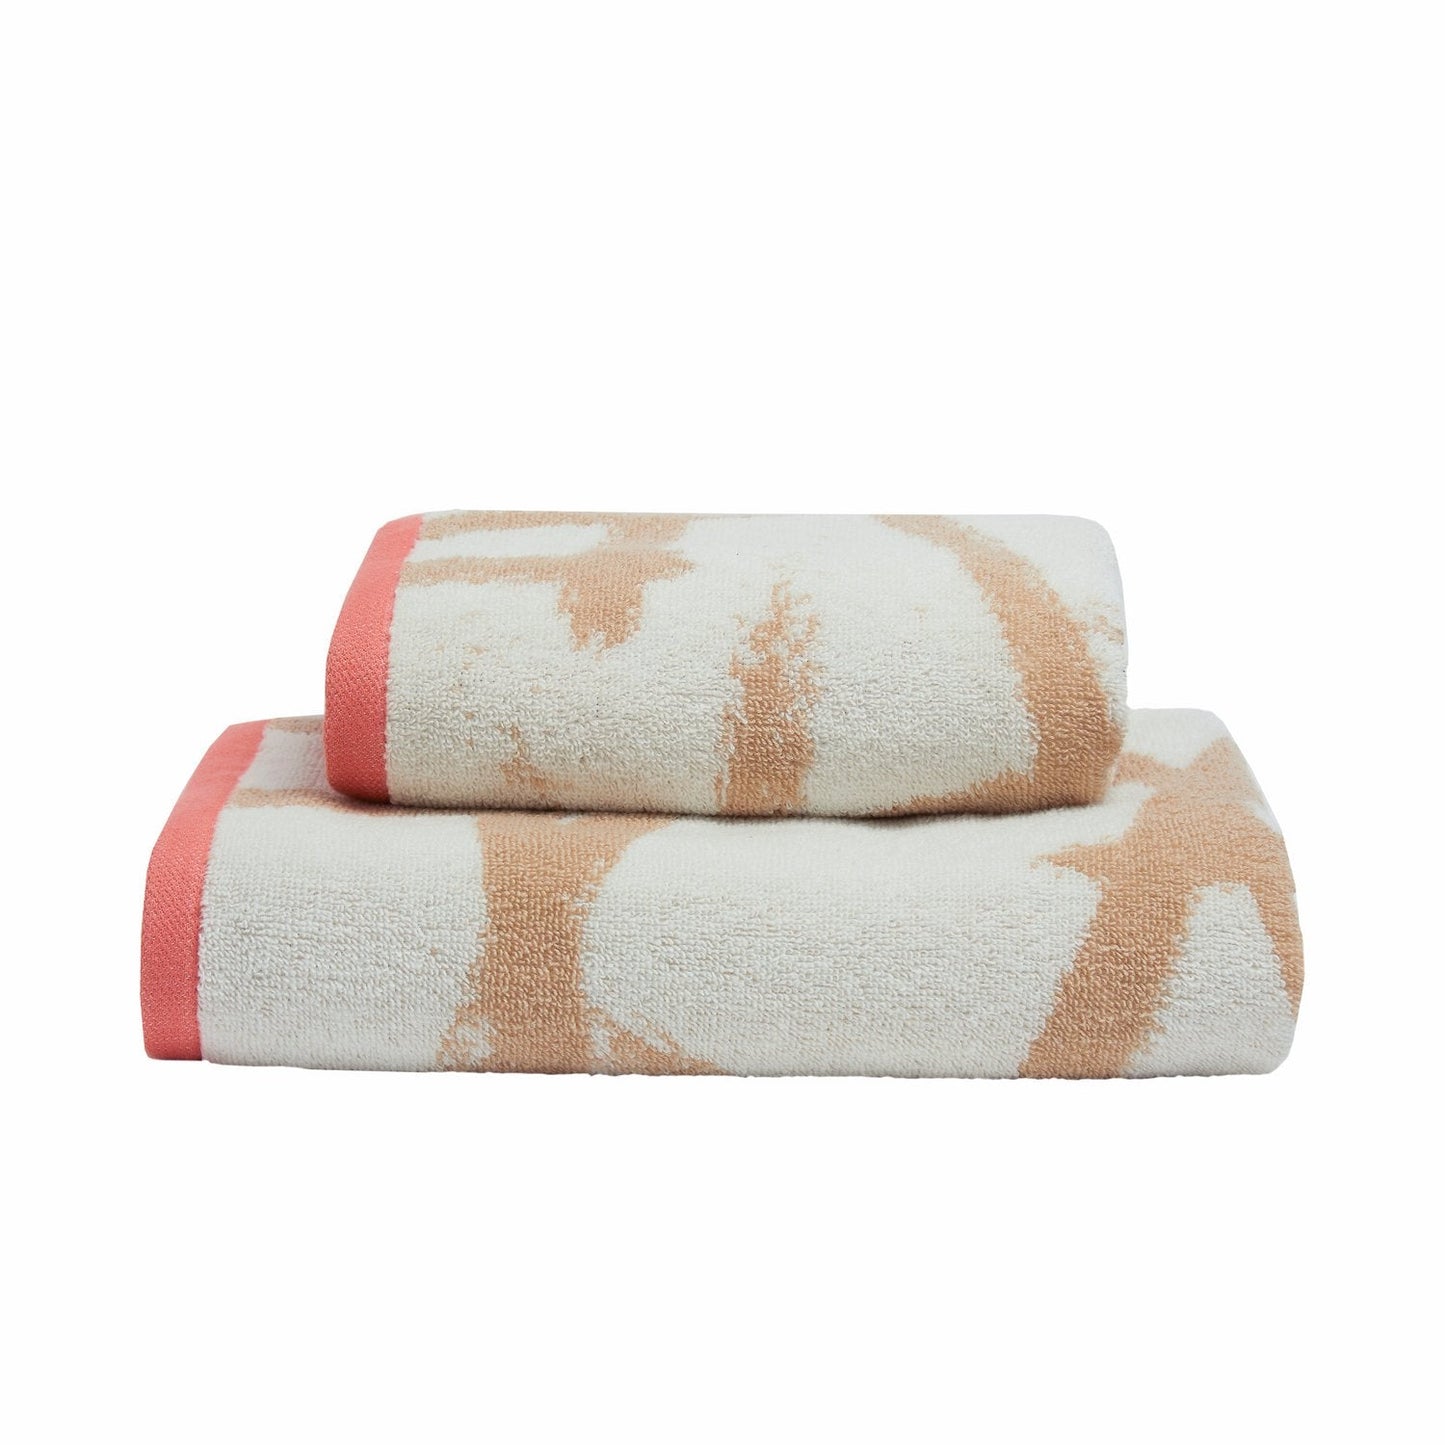 Leda Natural/Coral Geometric 550gsm Cotton Towels